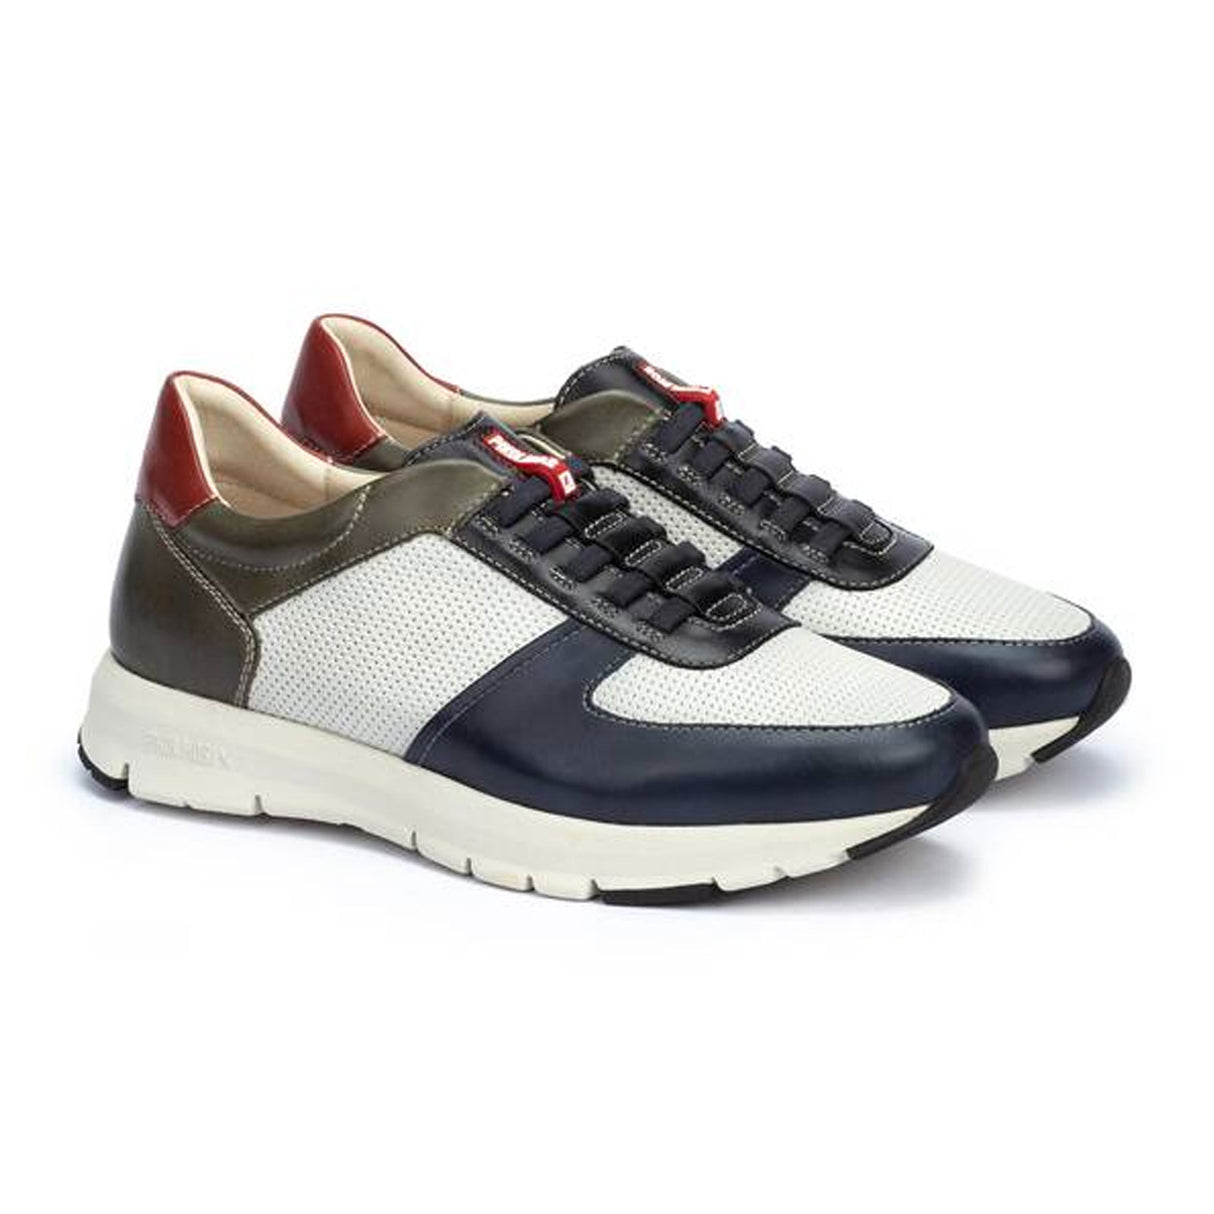 Pikolinos Reus M6F-6062C1 Sneaker (Men) - Blue Dress-Casual - Lace Ups - The Heel Shoe Fitters